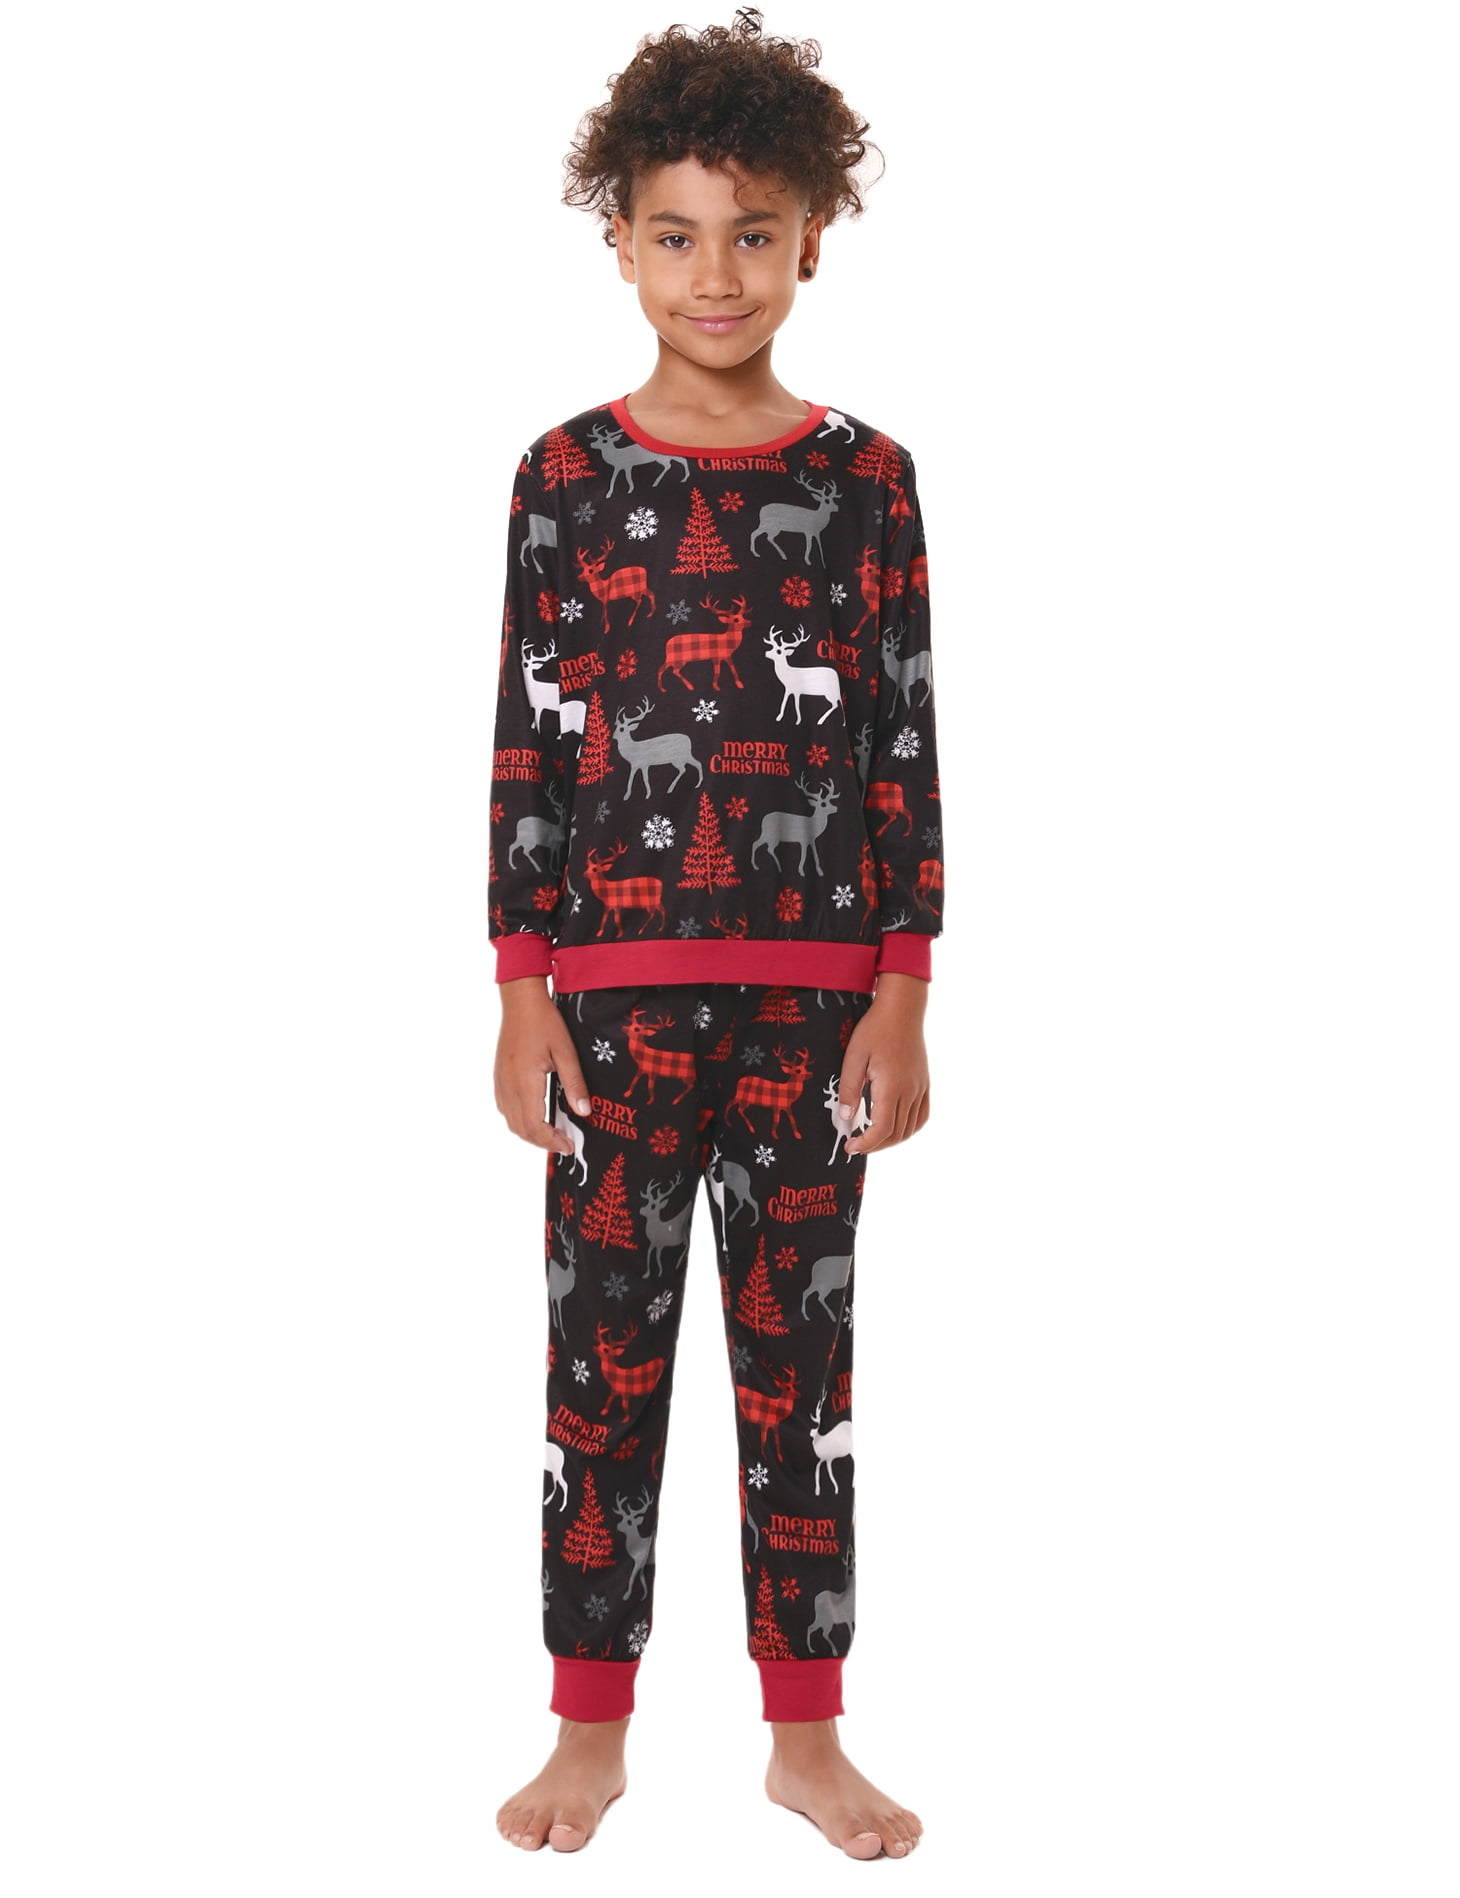 2PC Toddler Baby Kid Boys Long Sleeve Solid Tops+Pants Pajamas Sleepwear Outfits 